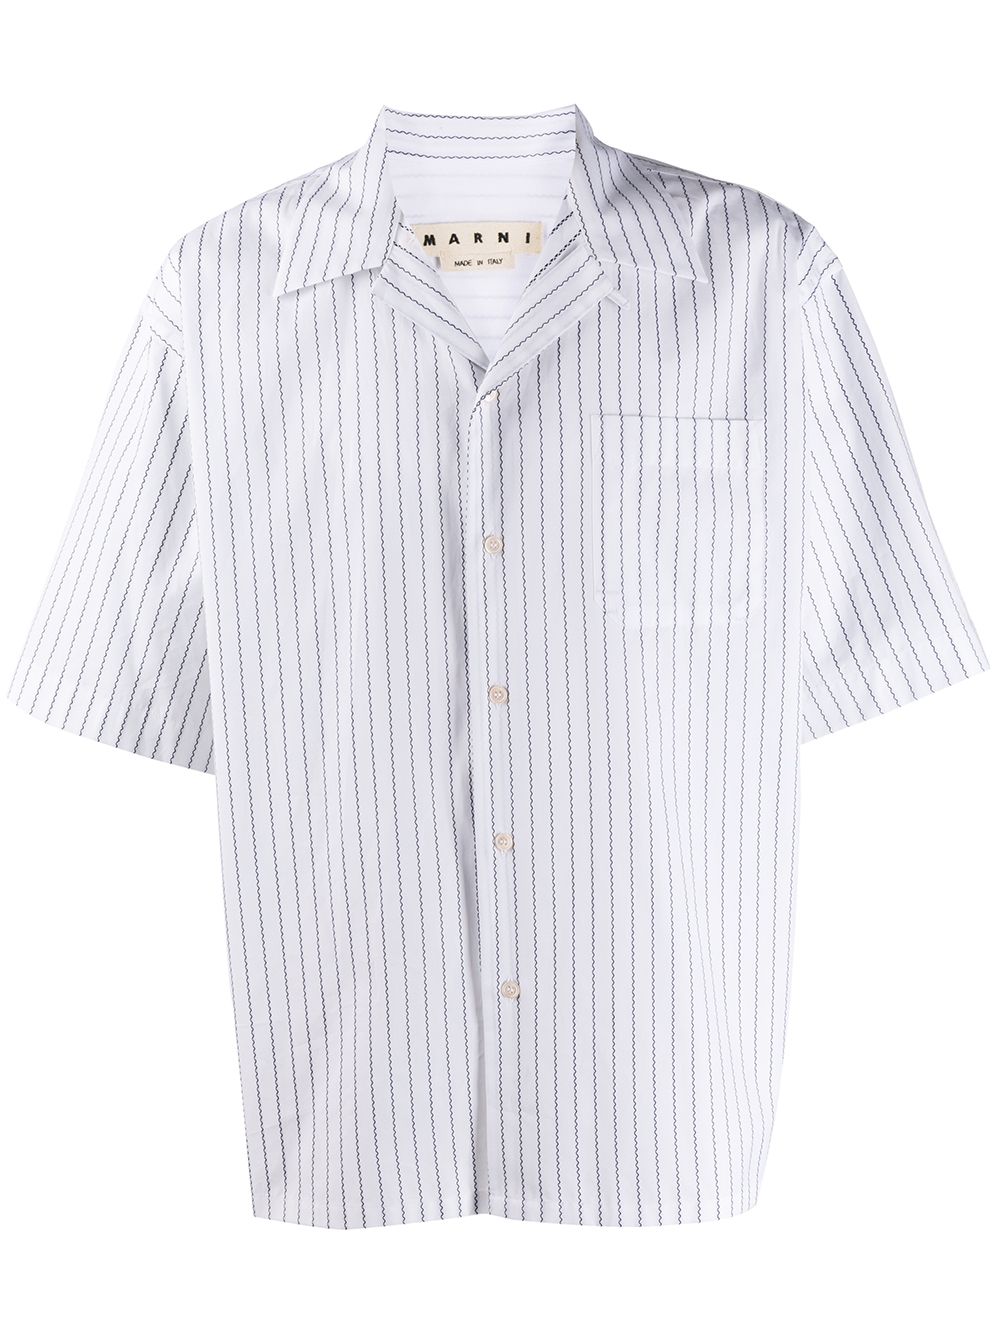 Marni Zig Zag Striped Shirt In White